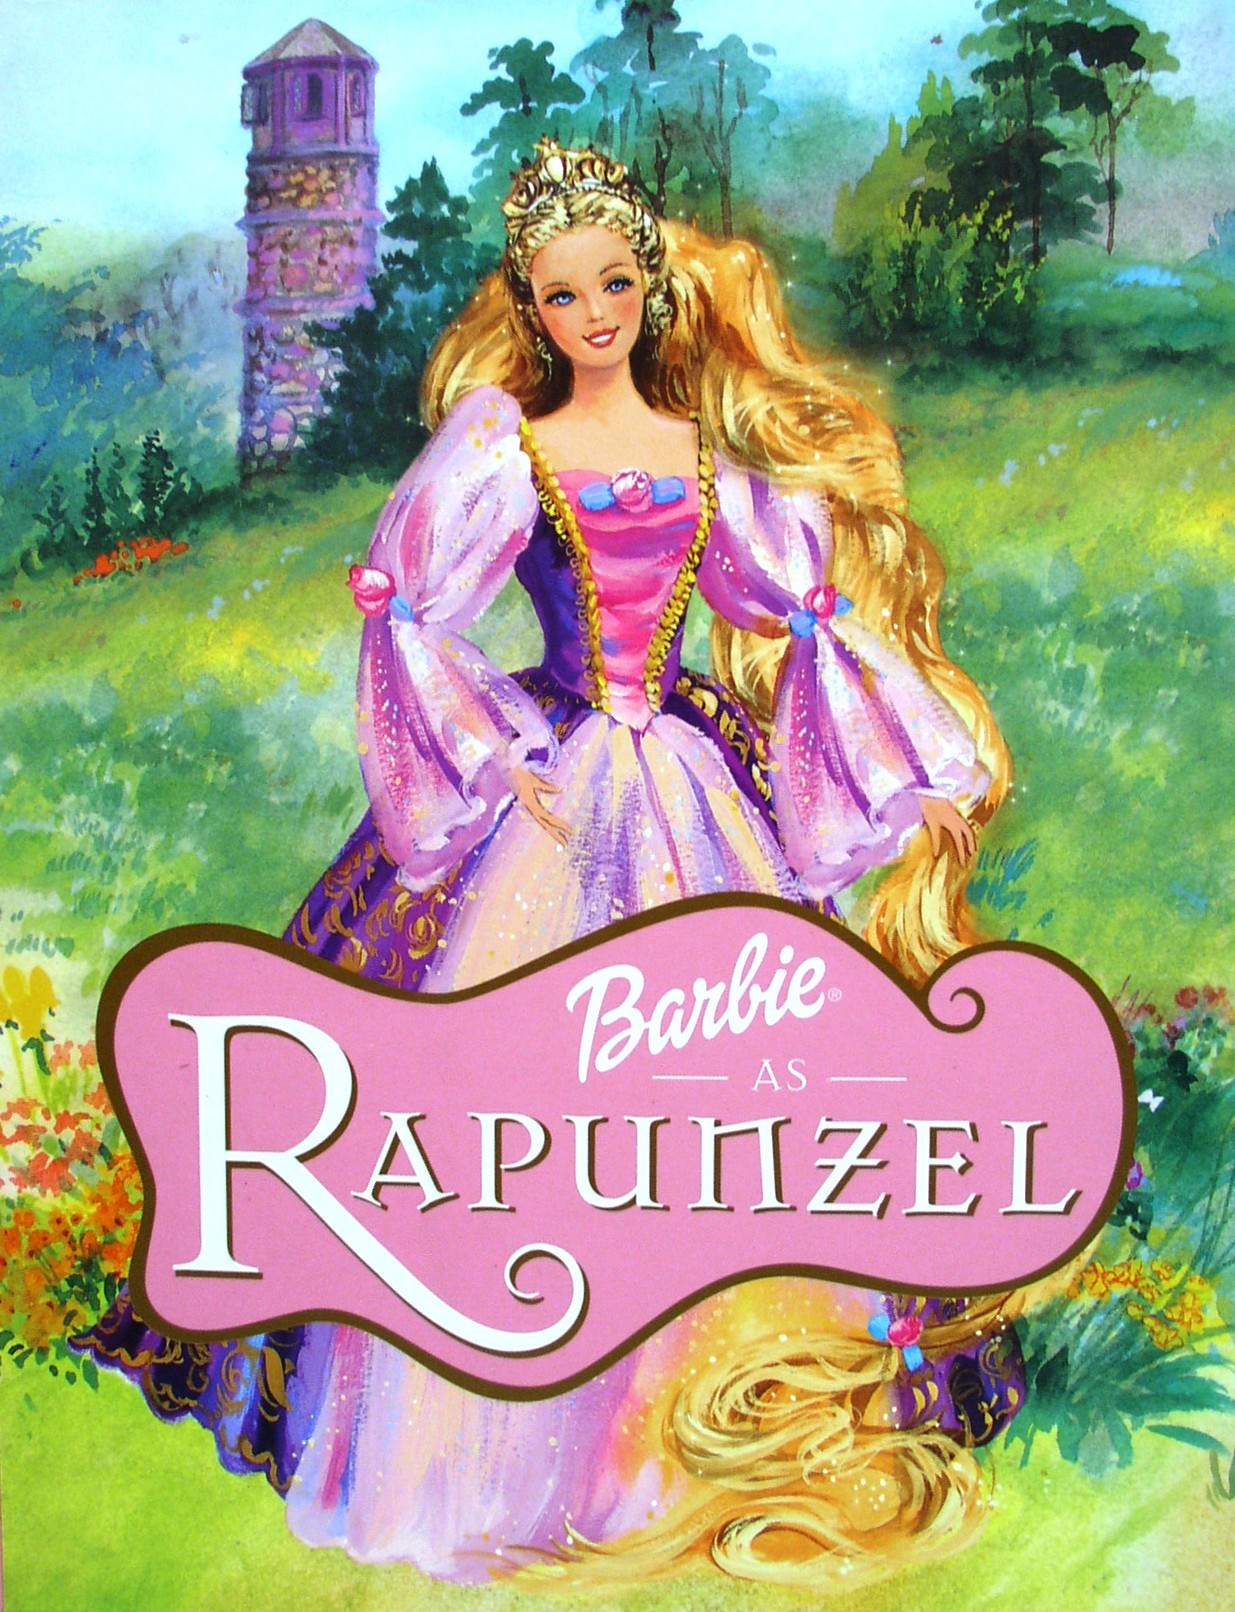 barbie rapunzel story